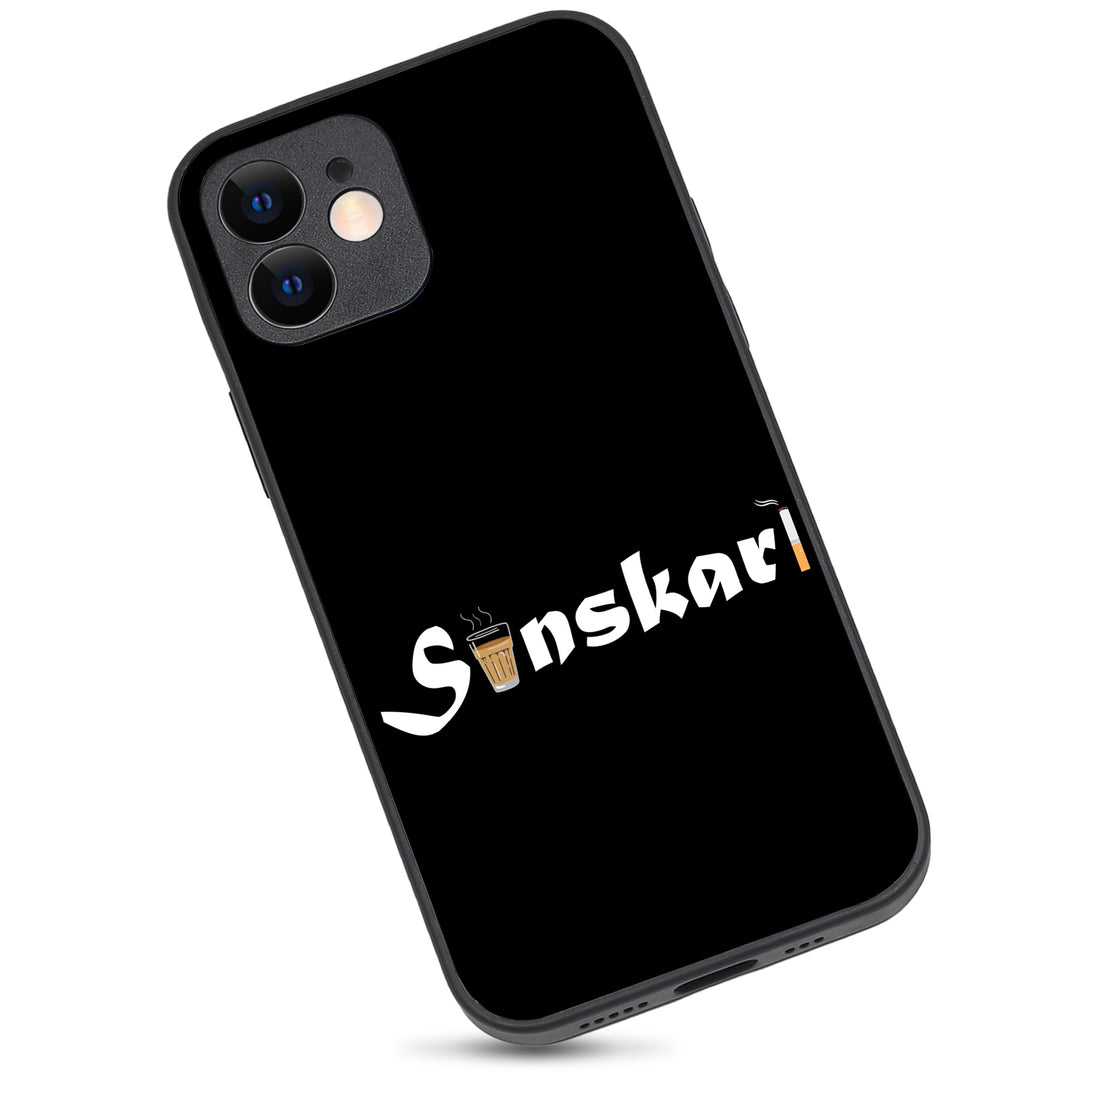 Sanskari Uniword iPhone 12 Case